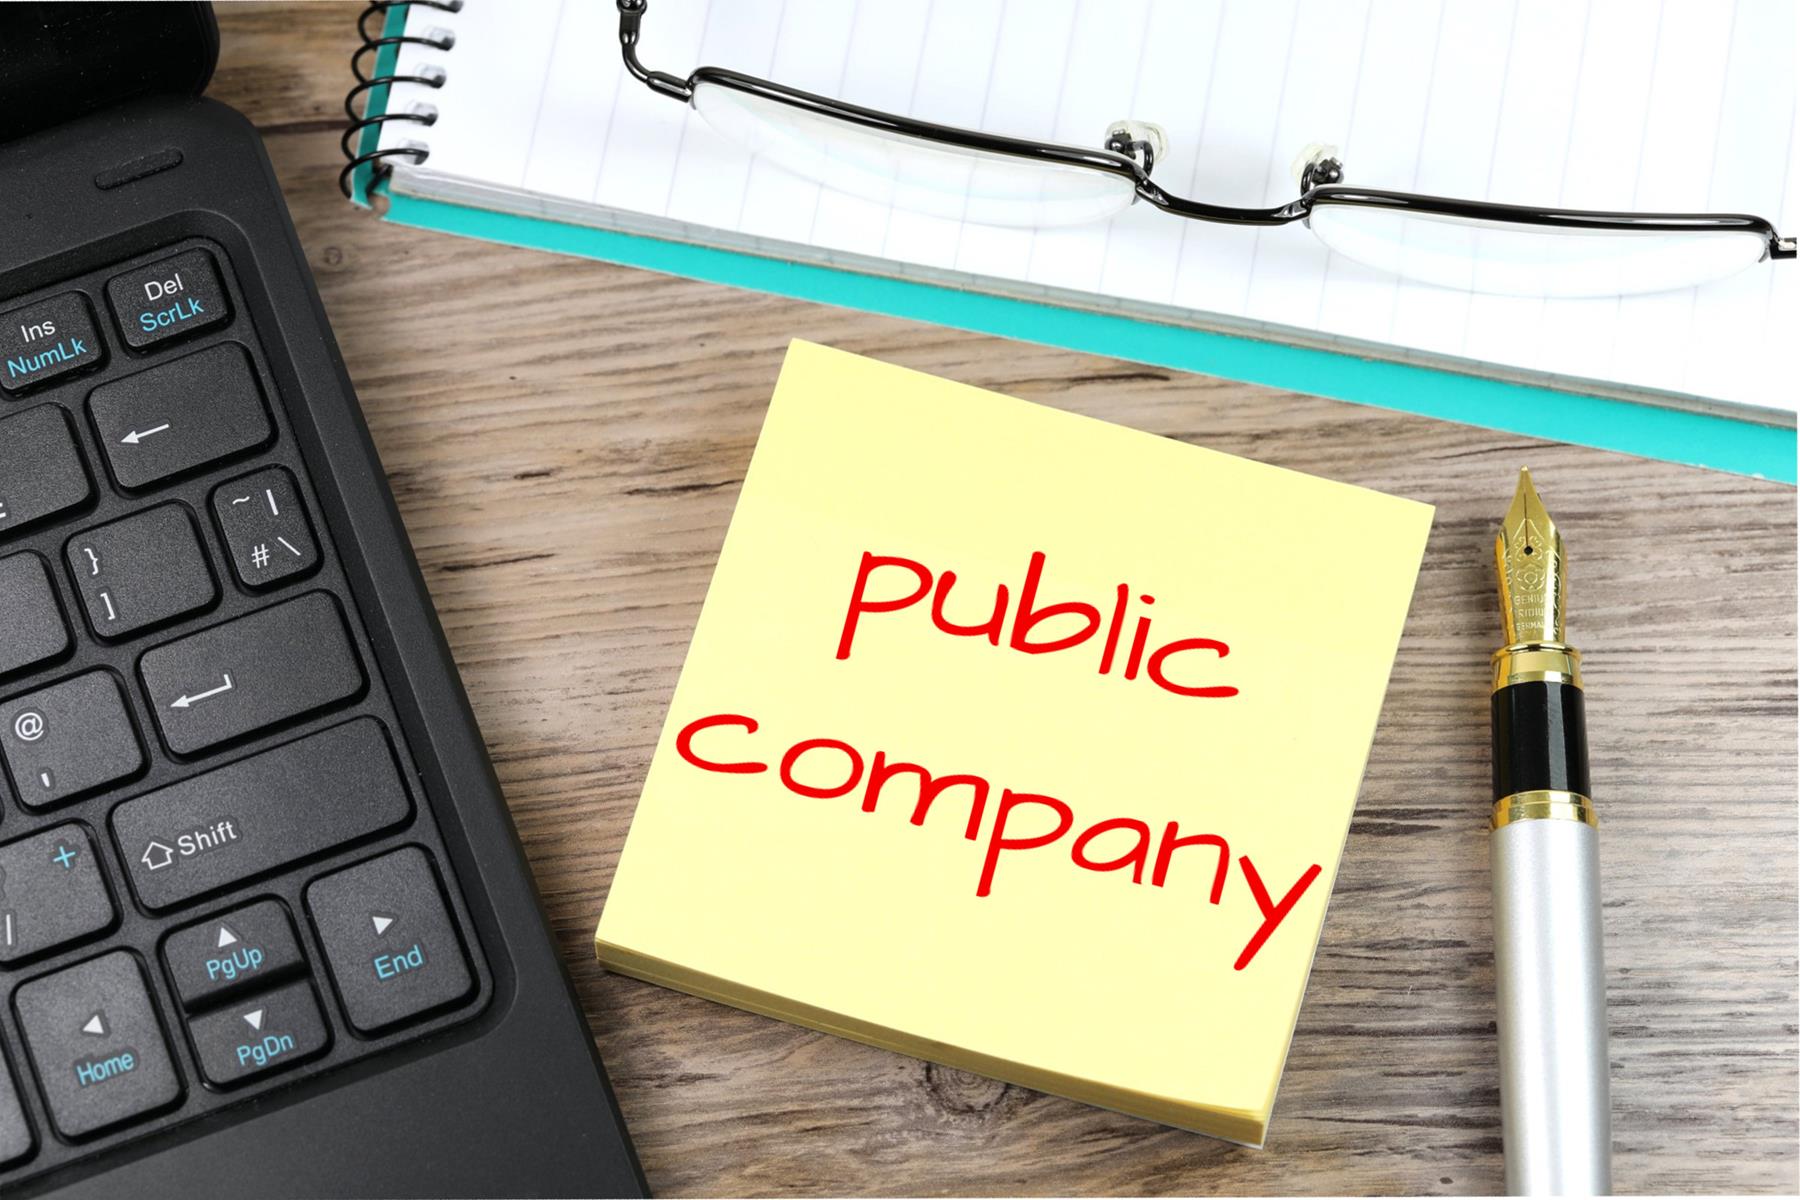 Public Company